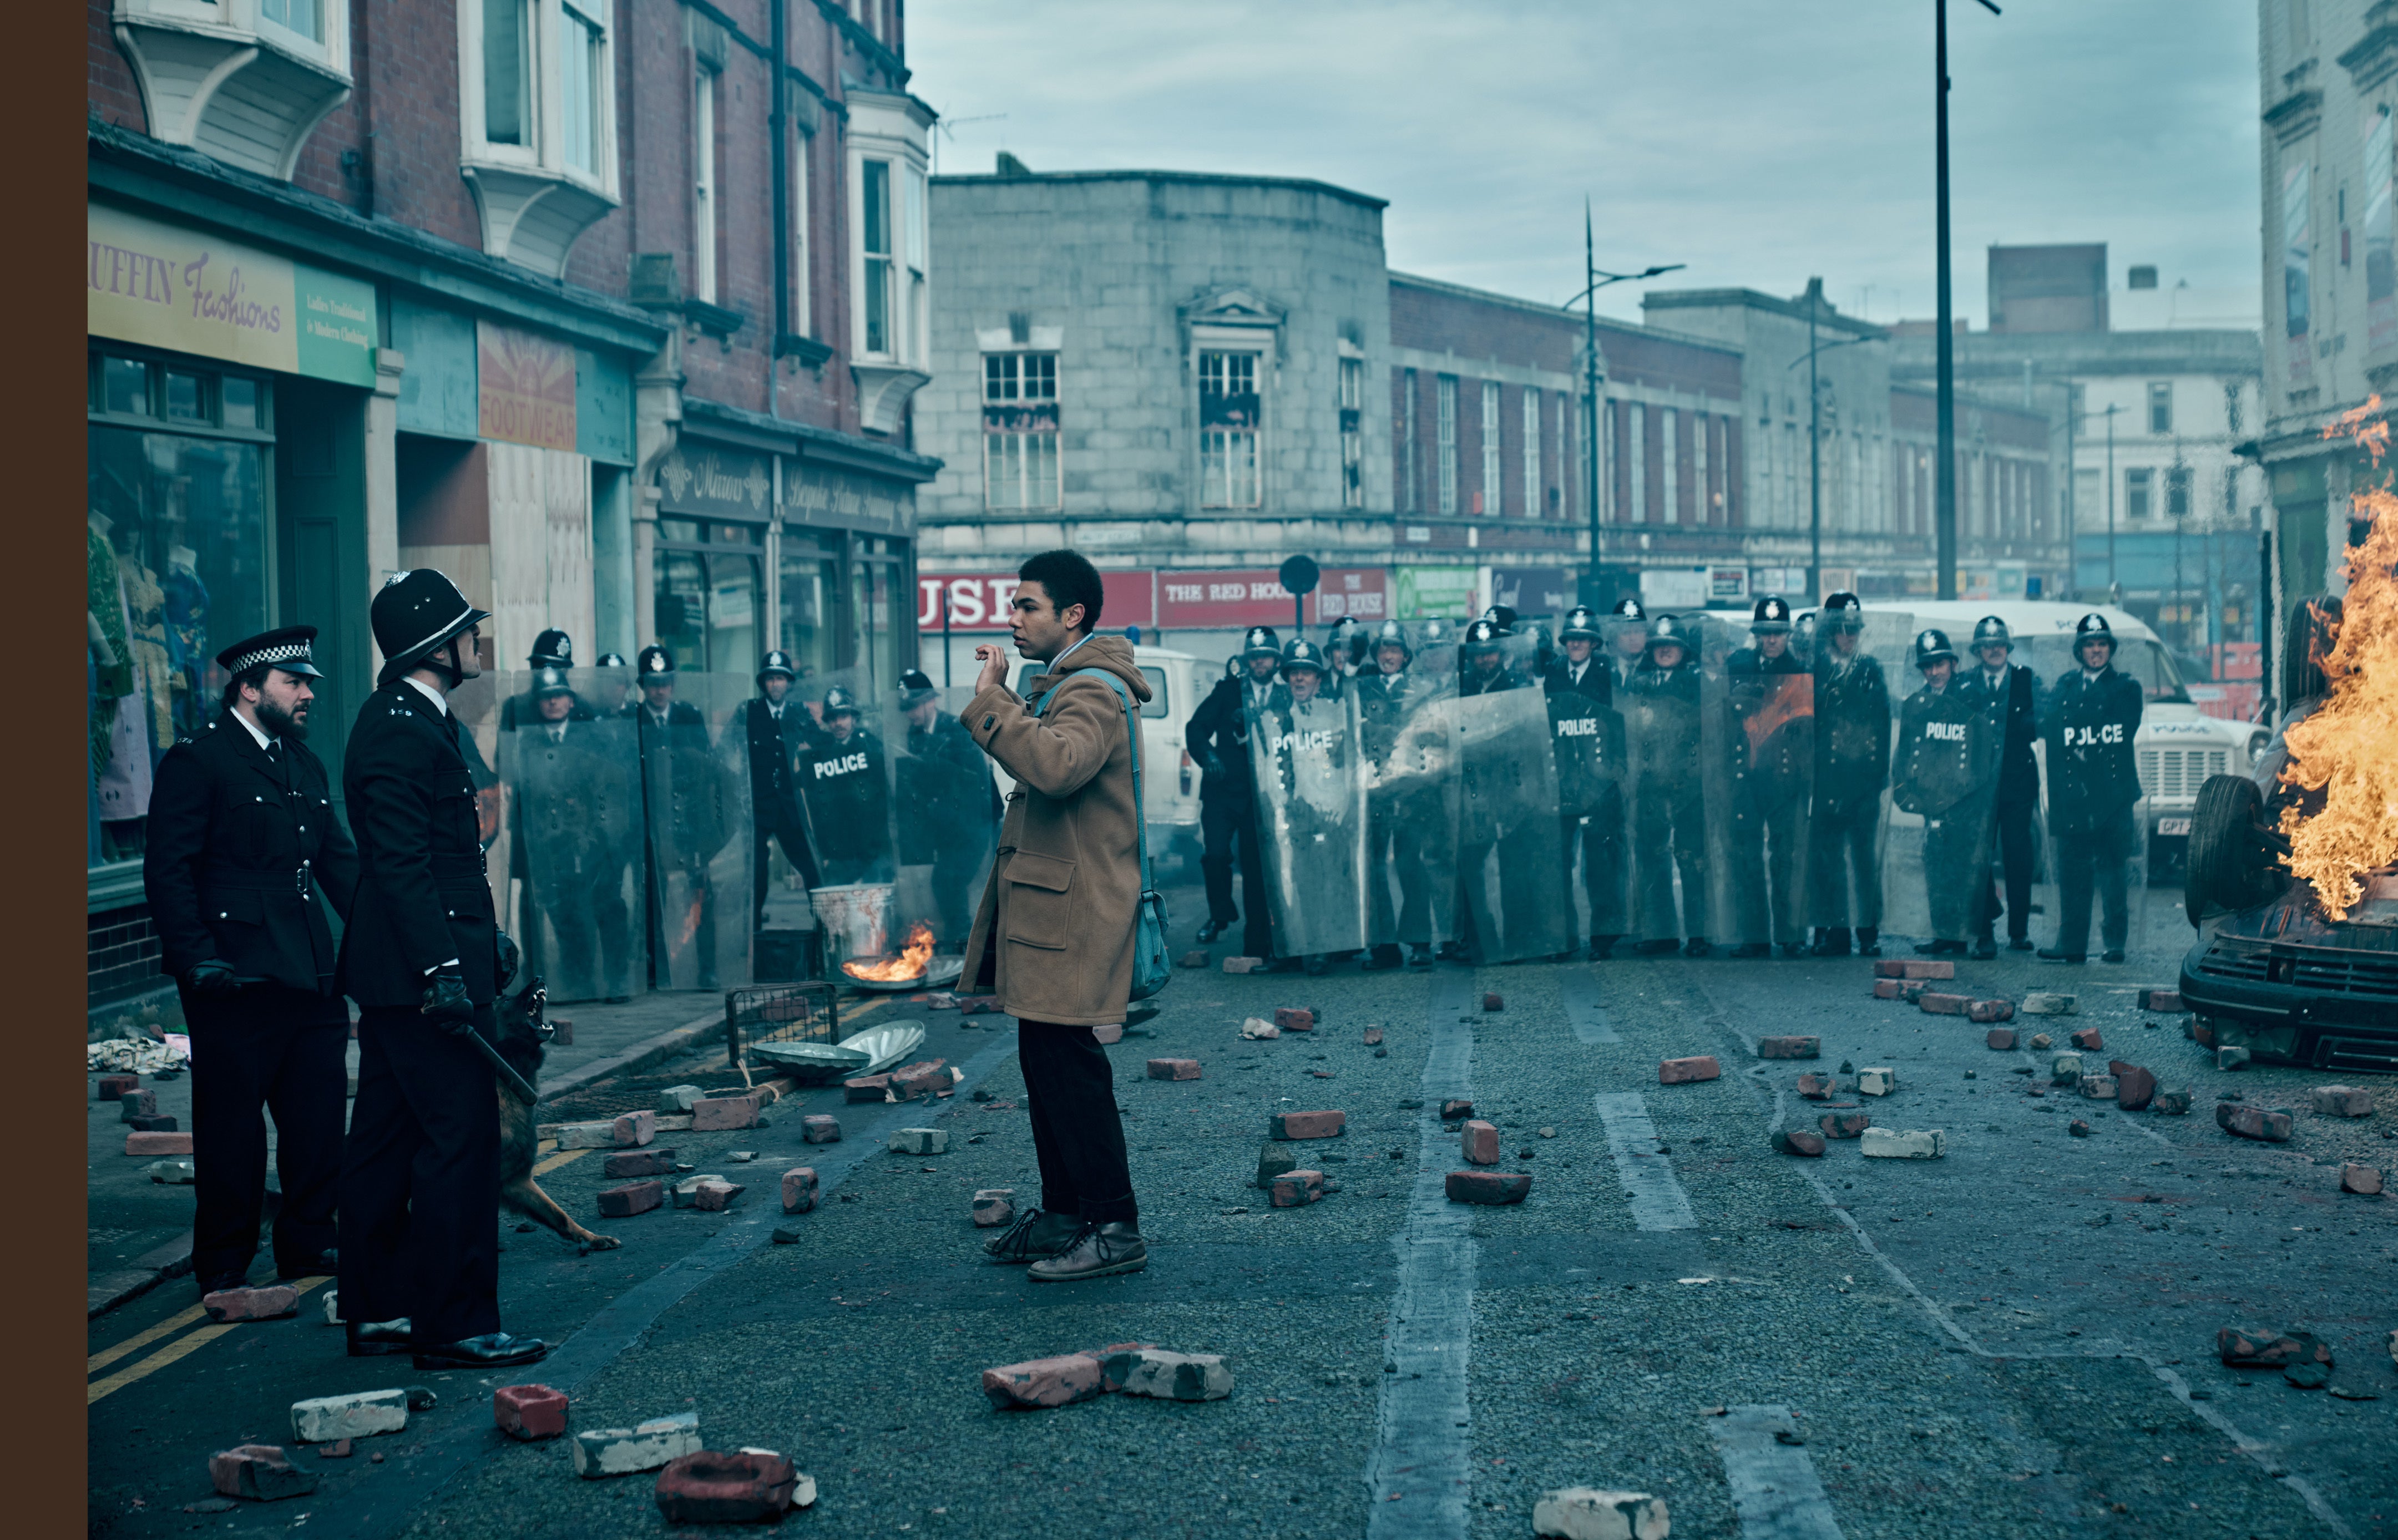 Several riot scenes were filmed in Stoke-on-Trent